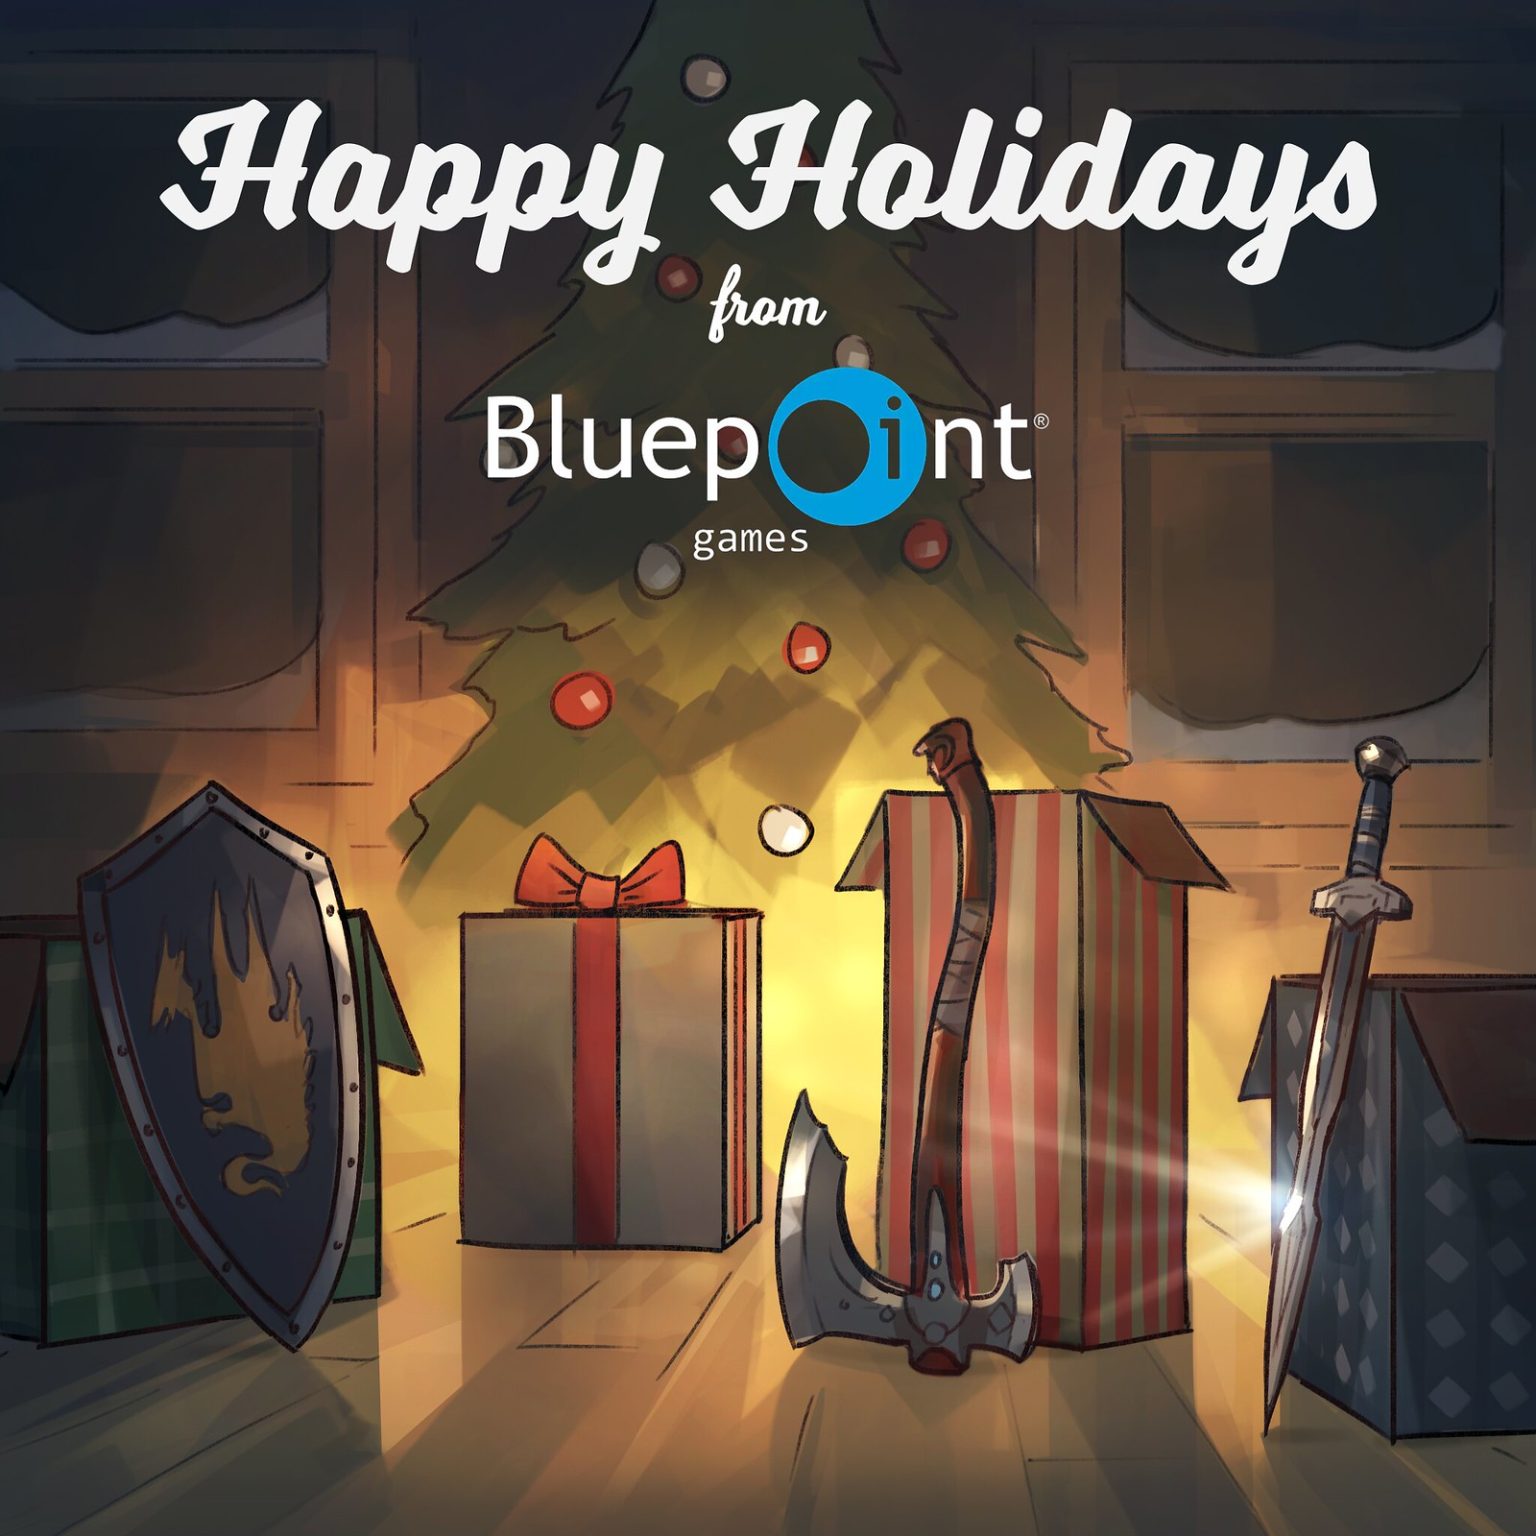 bluepoint-games-holiday-tease-1536x1536.jpg